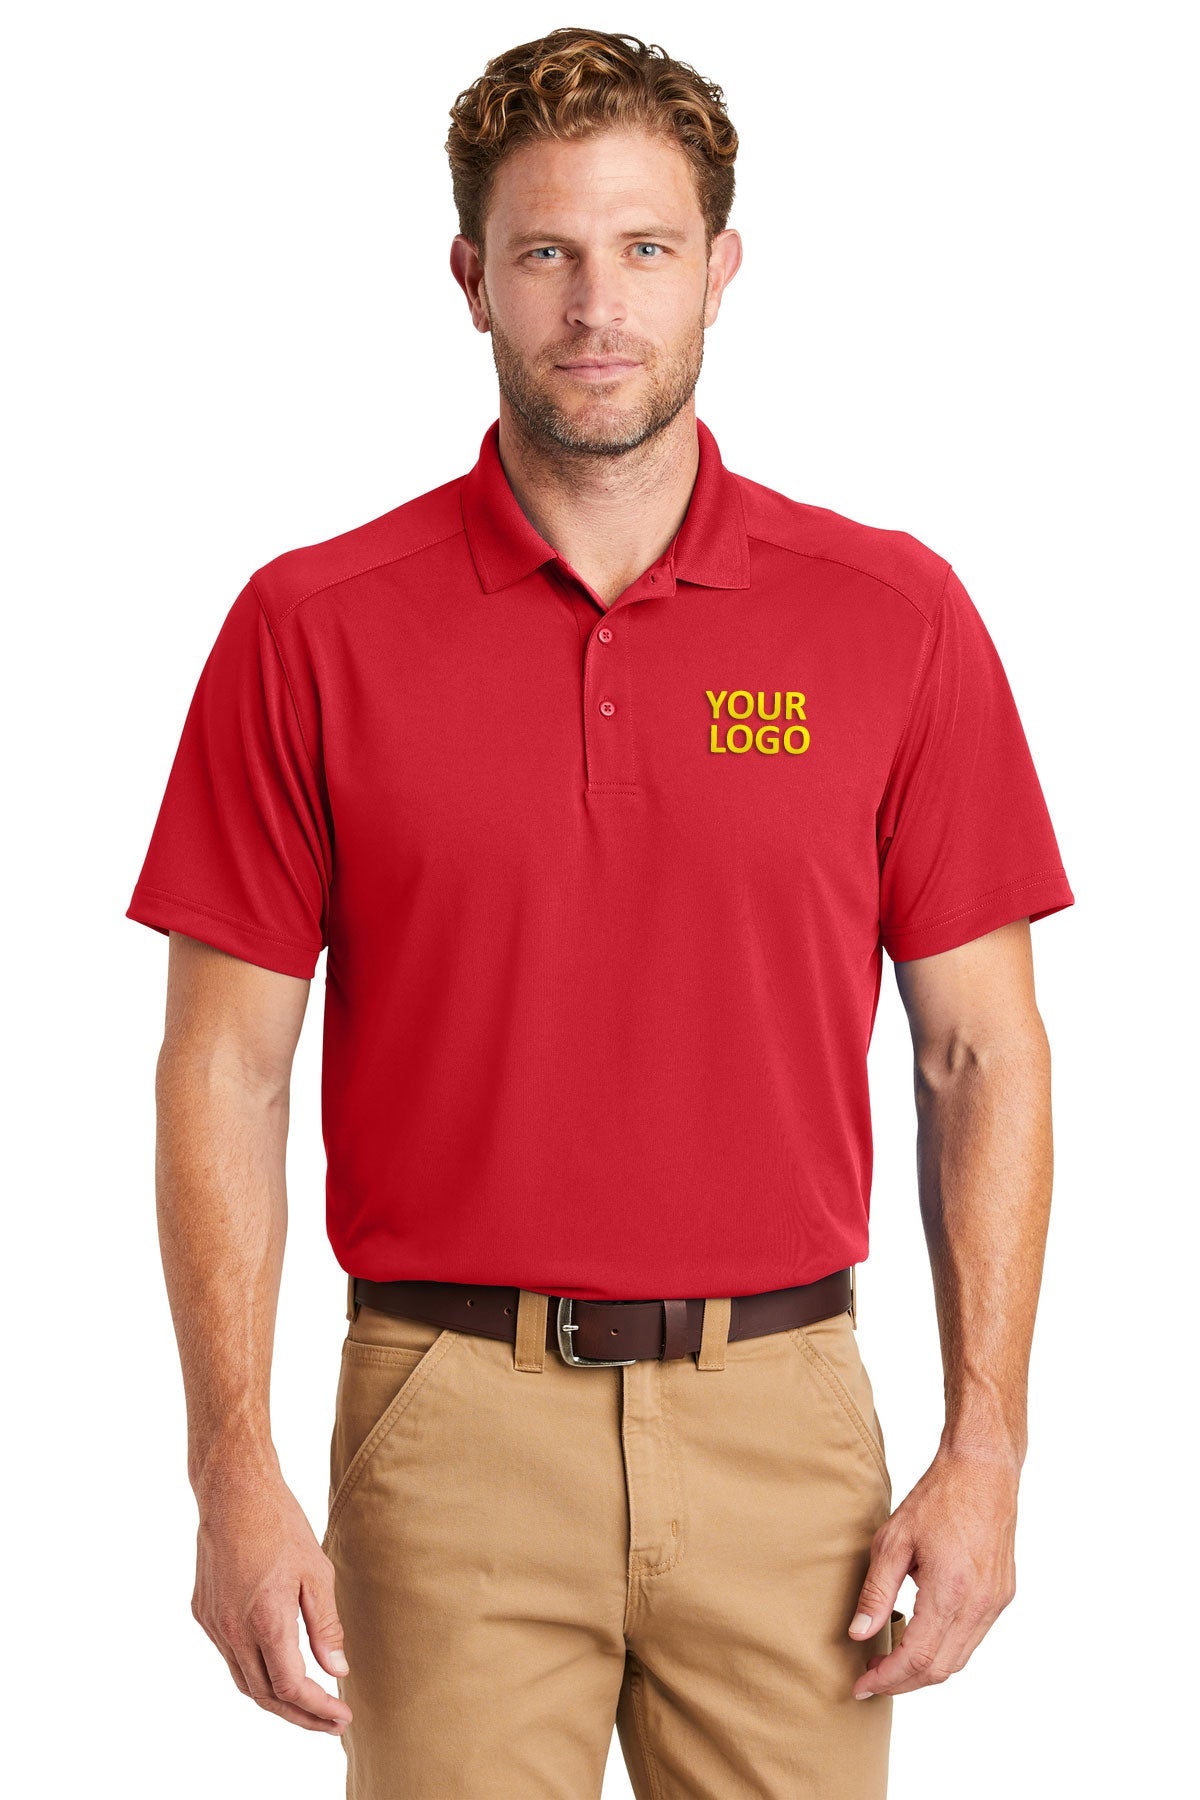 CornerStone Red CS418 custom polo shirts for business